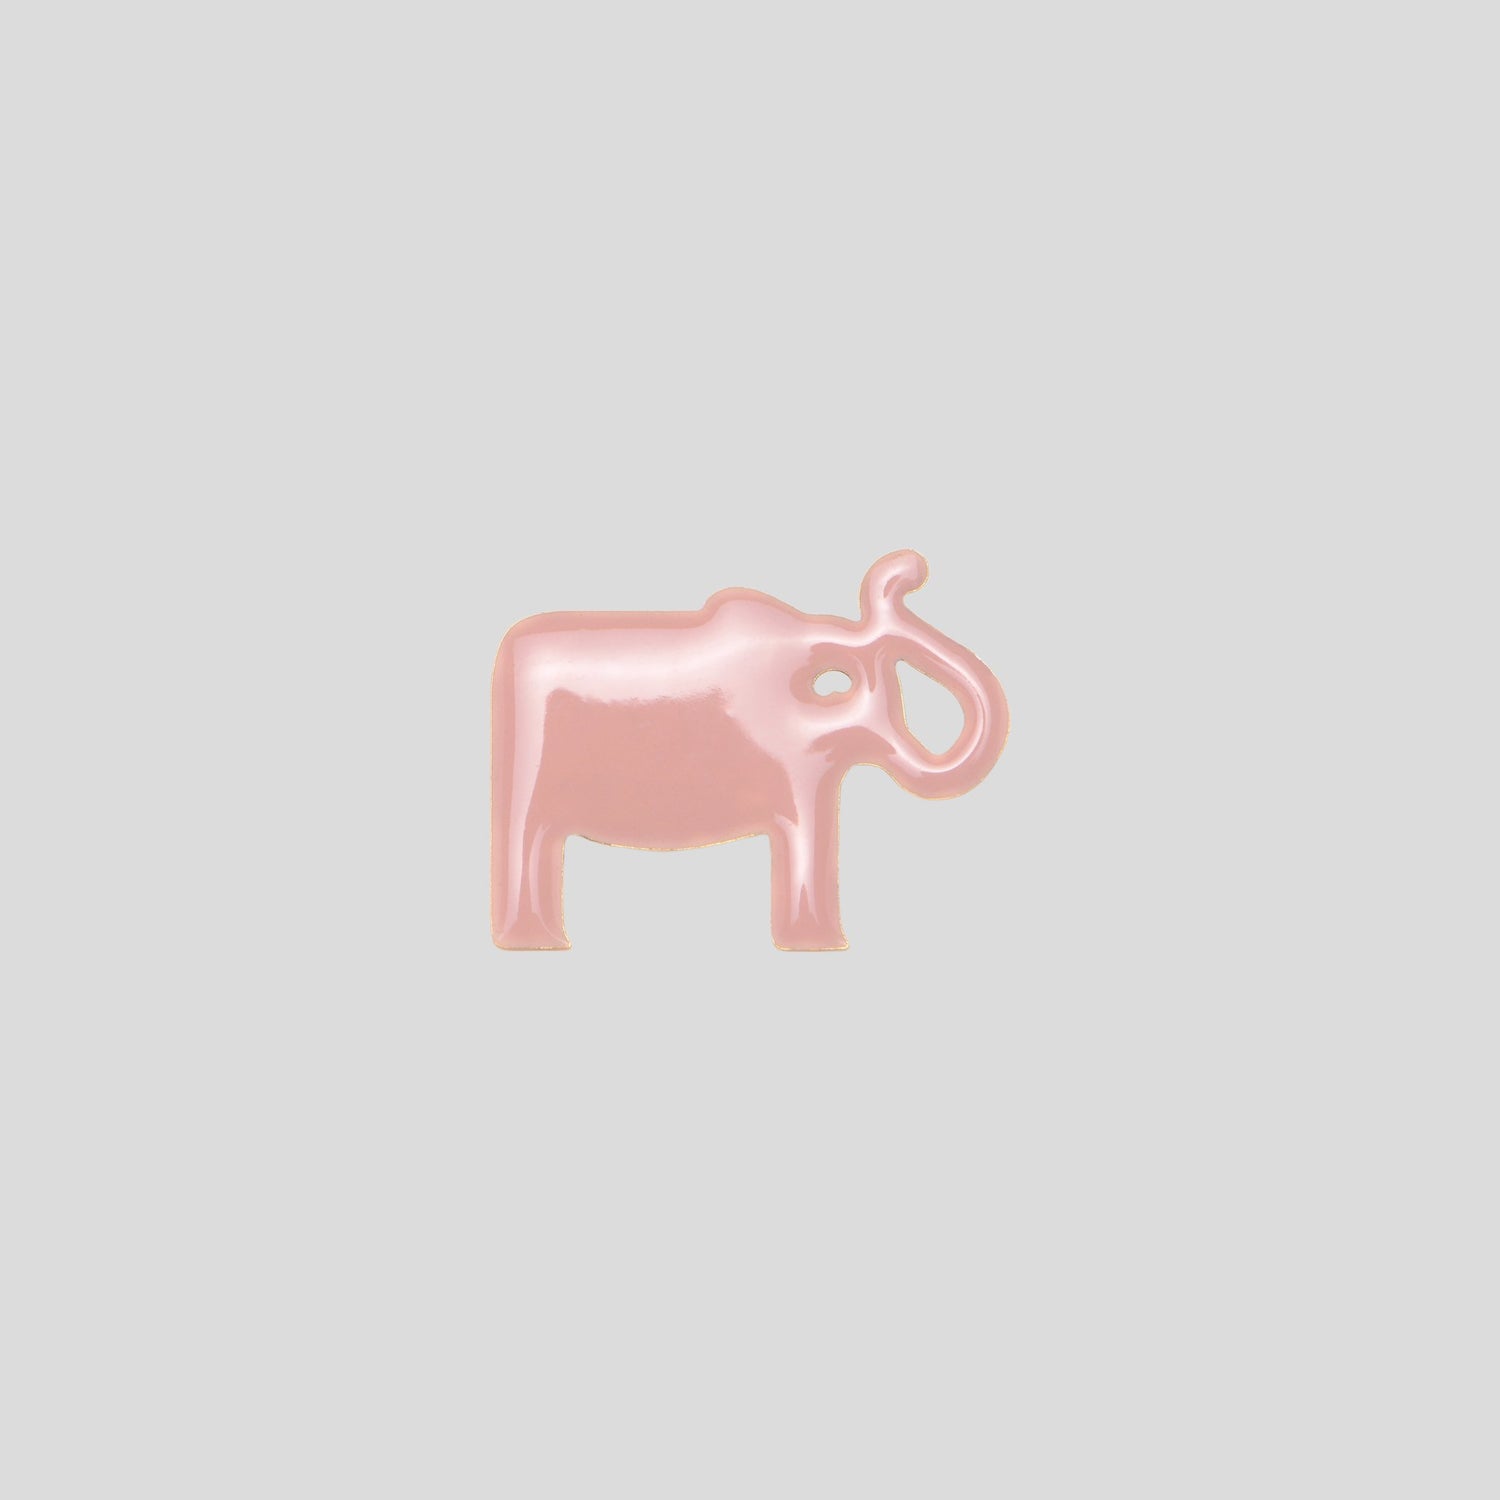 Pin pink elephant